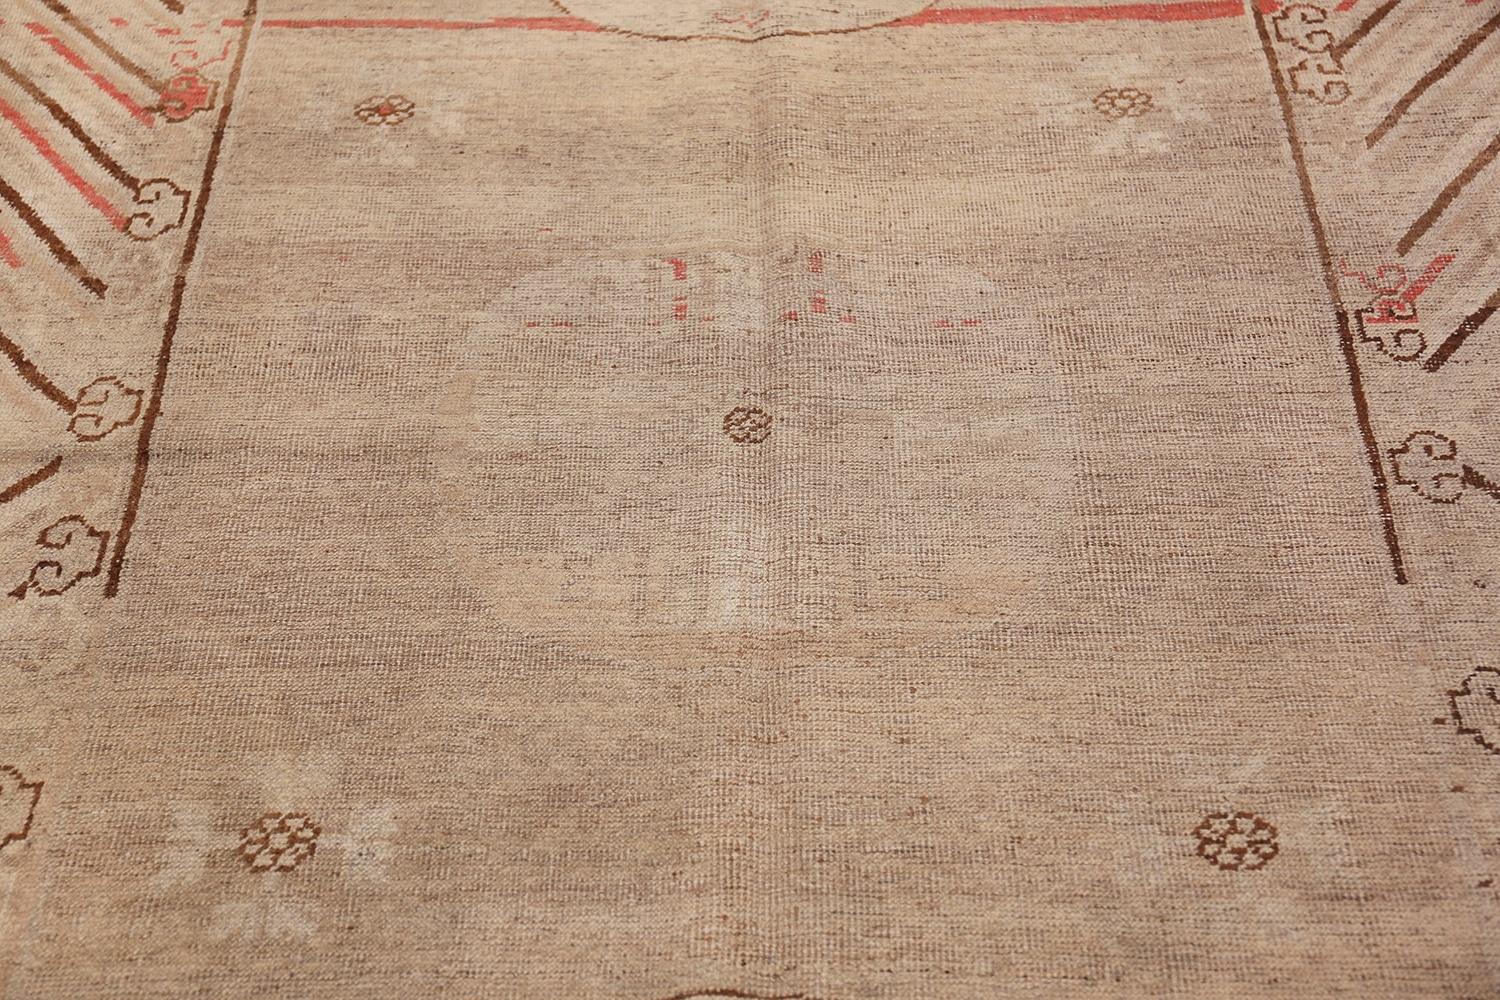 Antique Khotan rug, Country of Origin: East Turkestan, Circa date: 1880. Size: 4 ft 10 in x 9 ft (1.47 m x 2.74 m)

